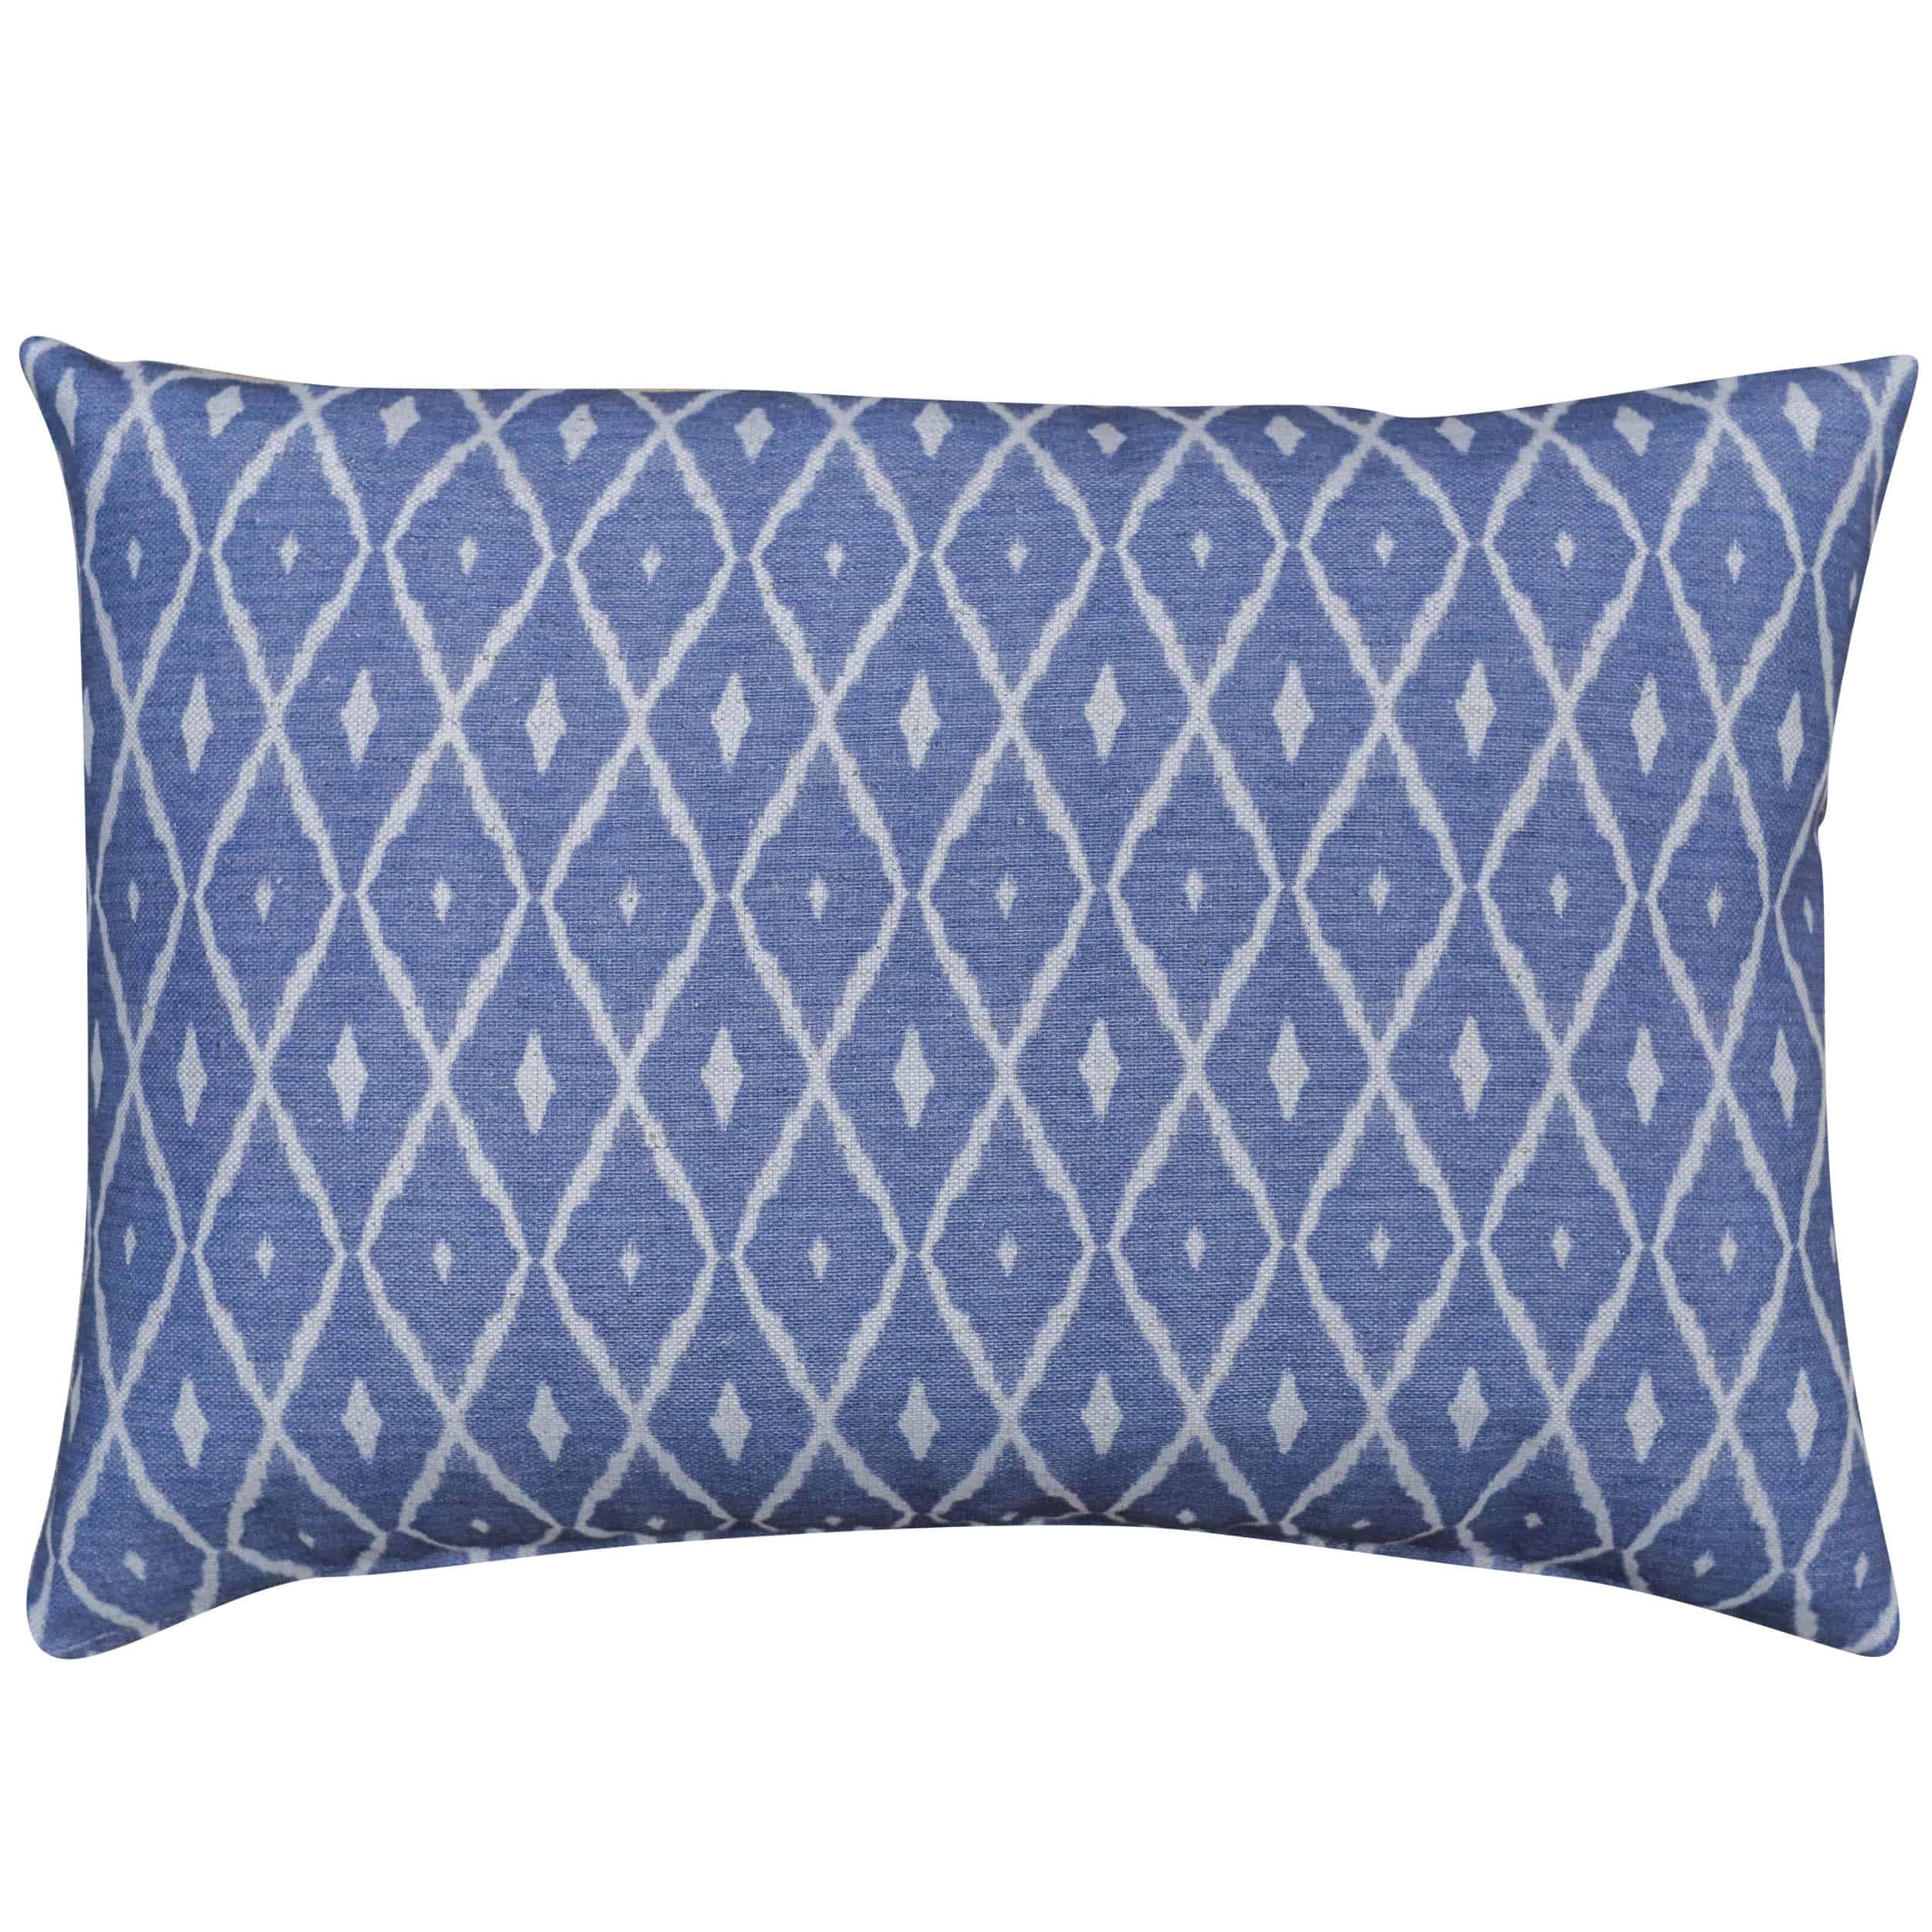 Tresco Boudoir Cushion Cover in Indigo Blue